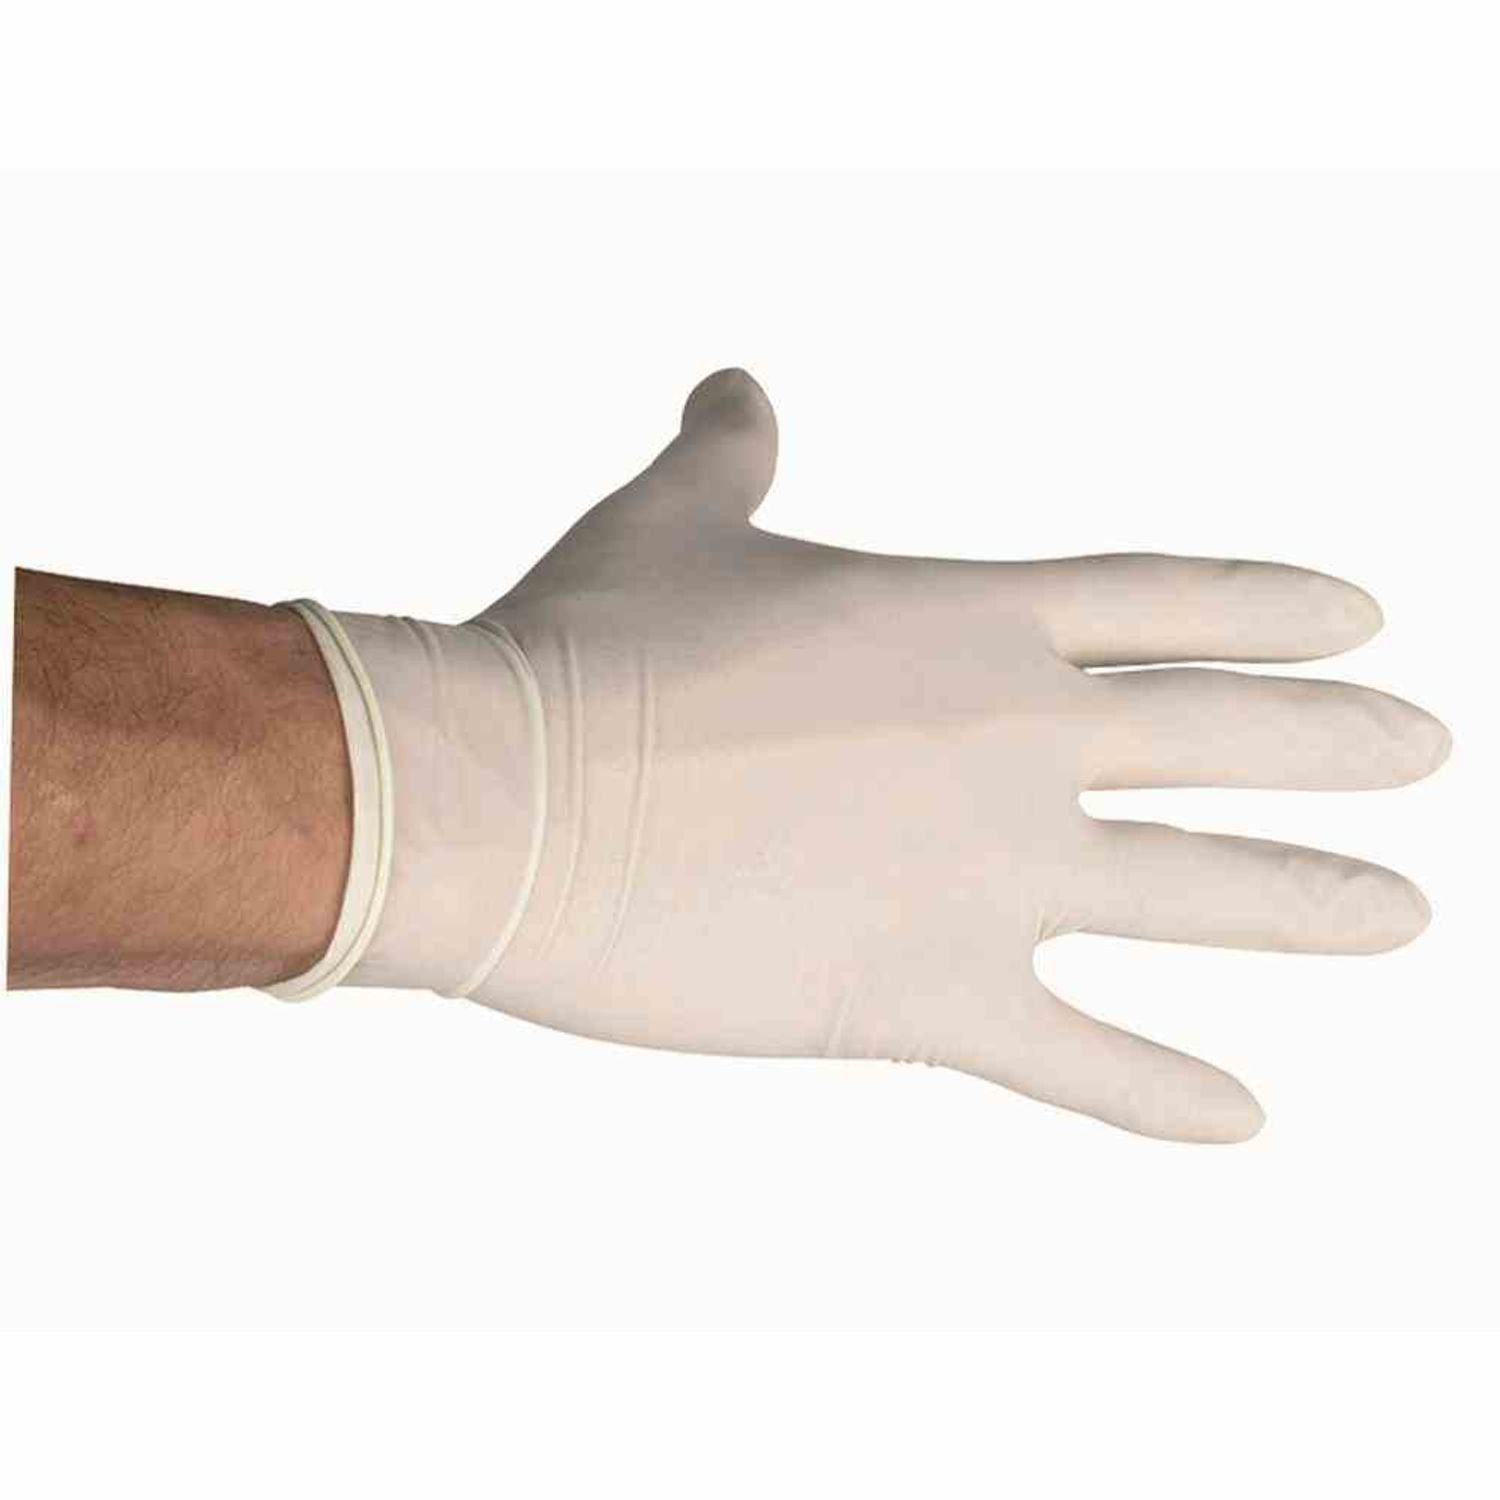 Einweghandschuhe 100 Latex Hygie Handschuhe Kerbl M Stk Gr Gartenhandschuhe Einmalhandschuhe